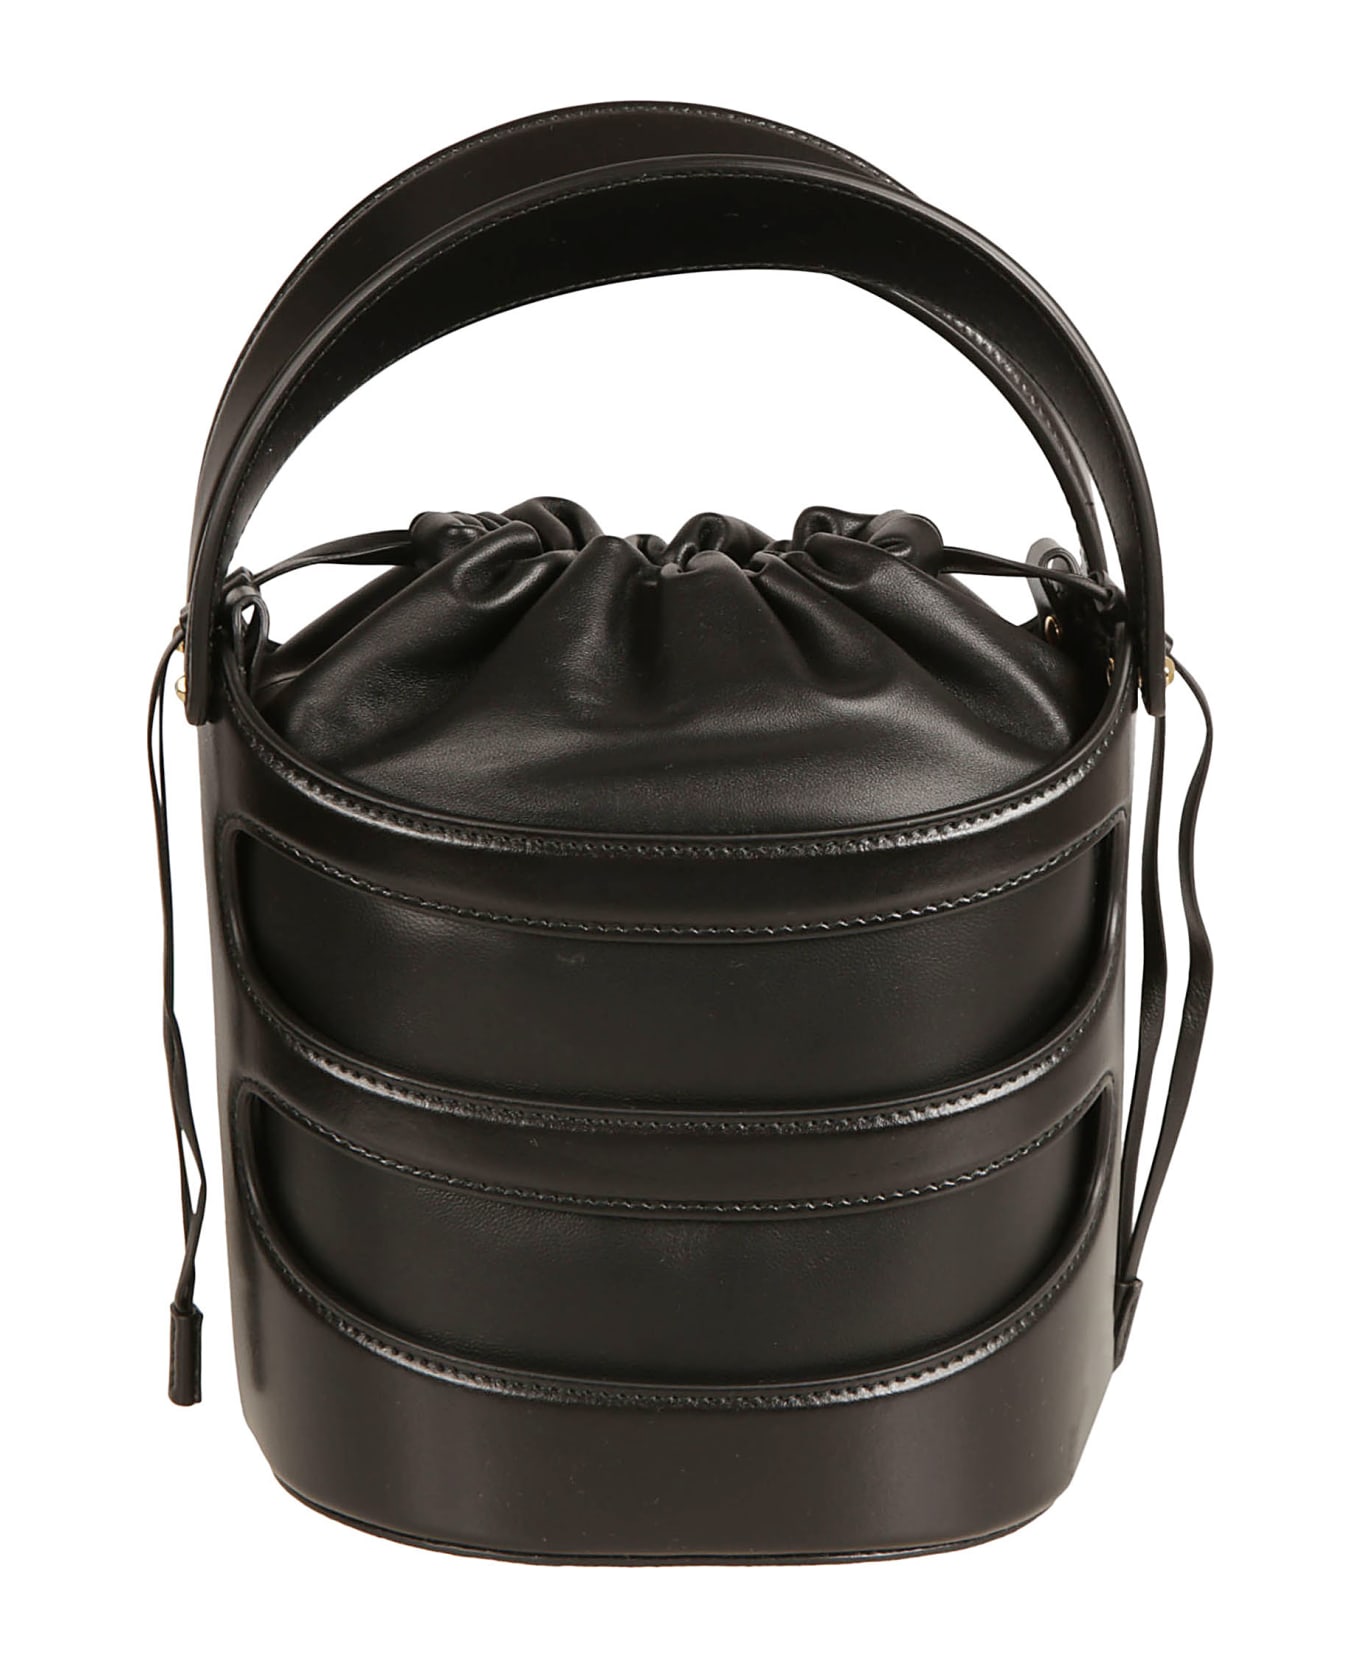 Alexander McQueen The Rise Bucket Bag - Black